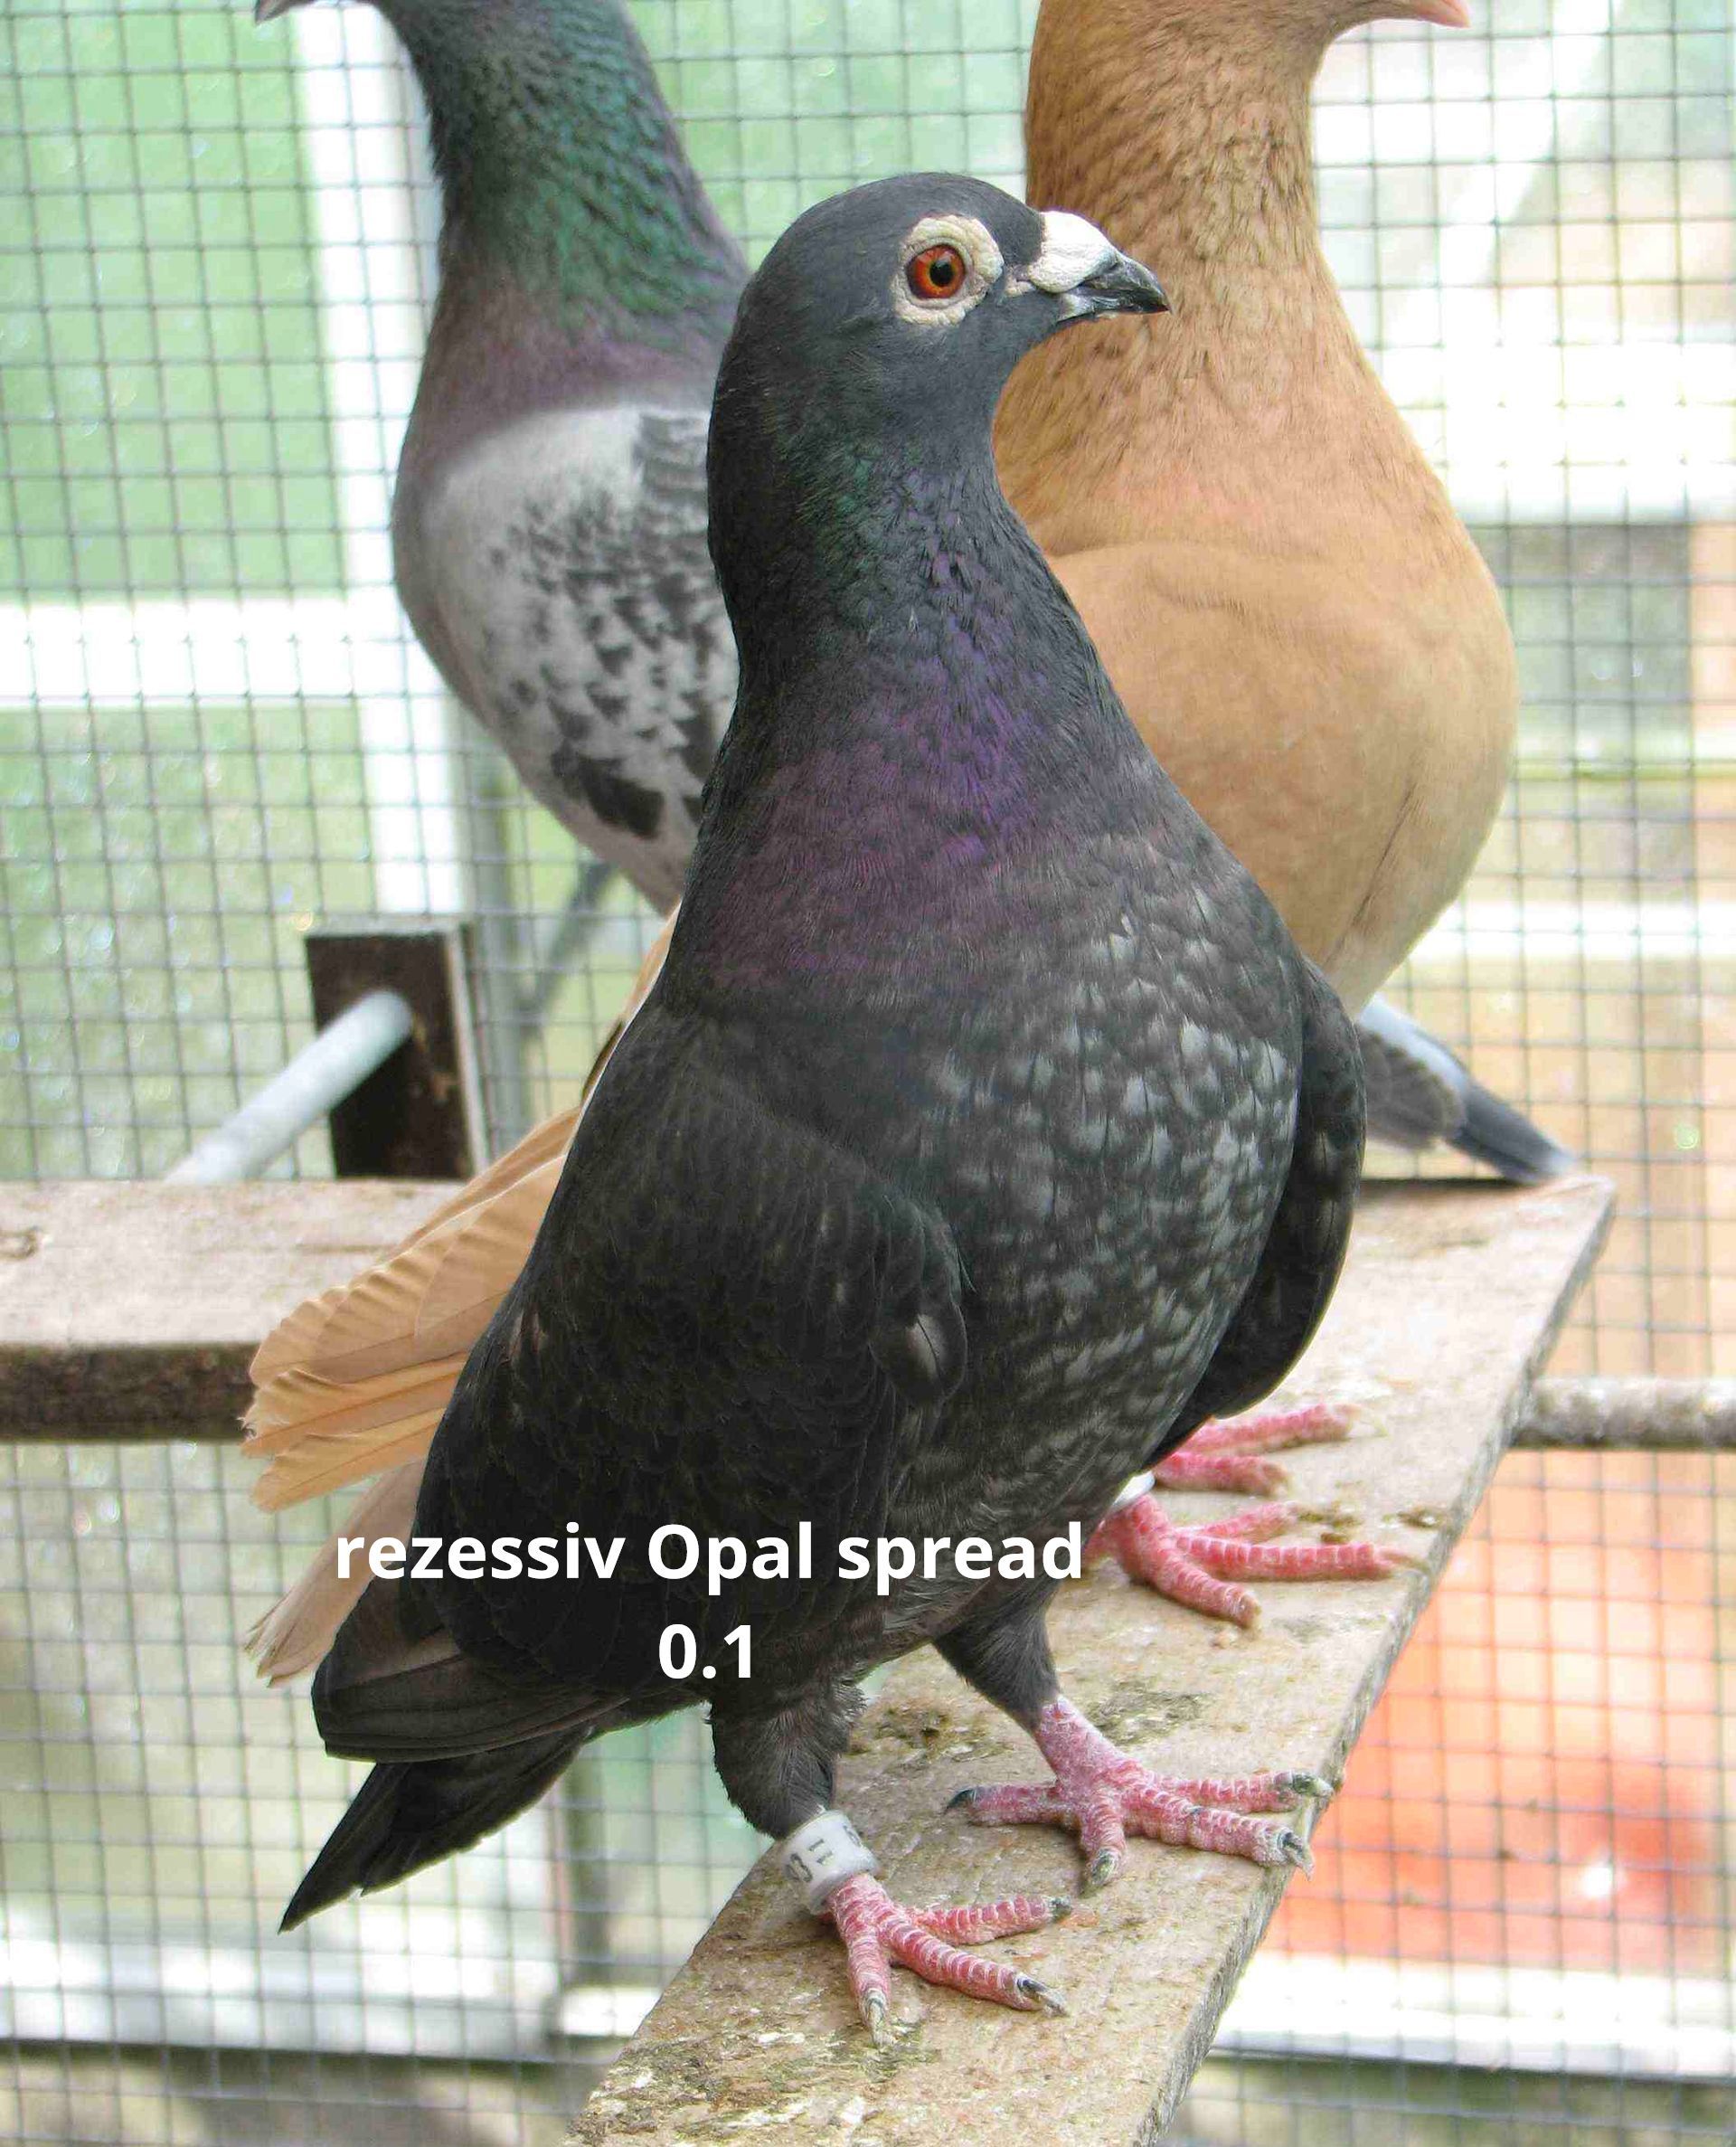 rezessiv opal spread, recessiv opaal, recessiv opal, recessiv opal raicing pigeons, rezessiv opale Brieftauben